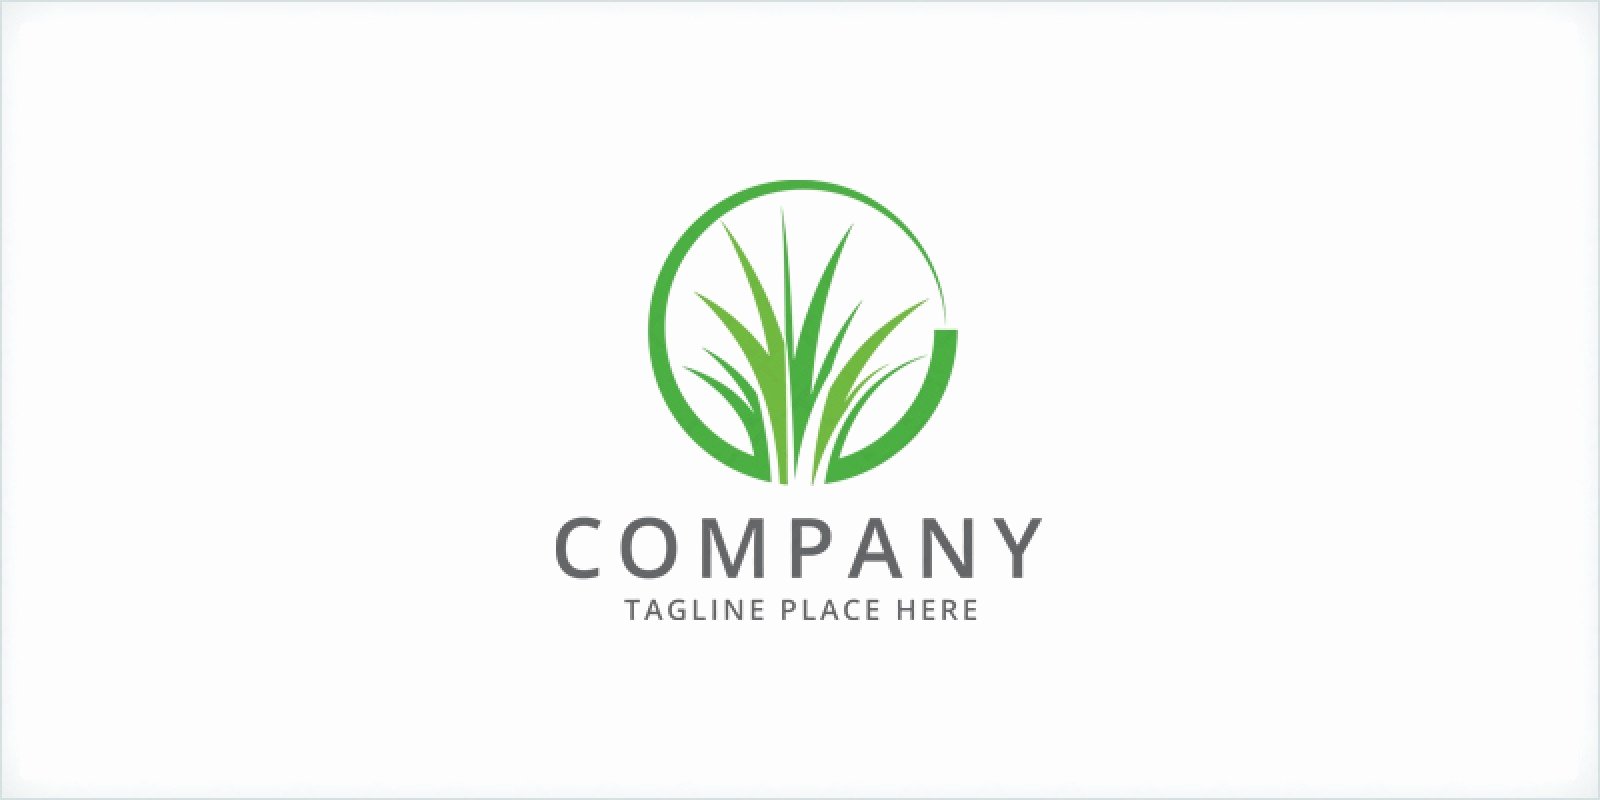 Lawn Care Logo Template Fresh Grass Lawn Care Logo Template